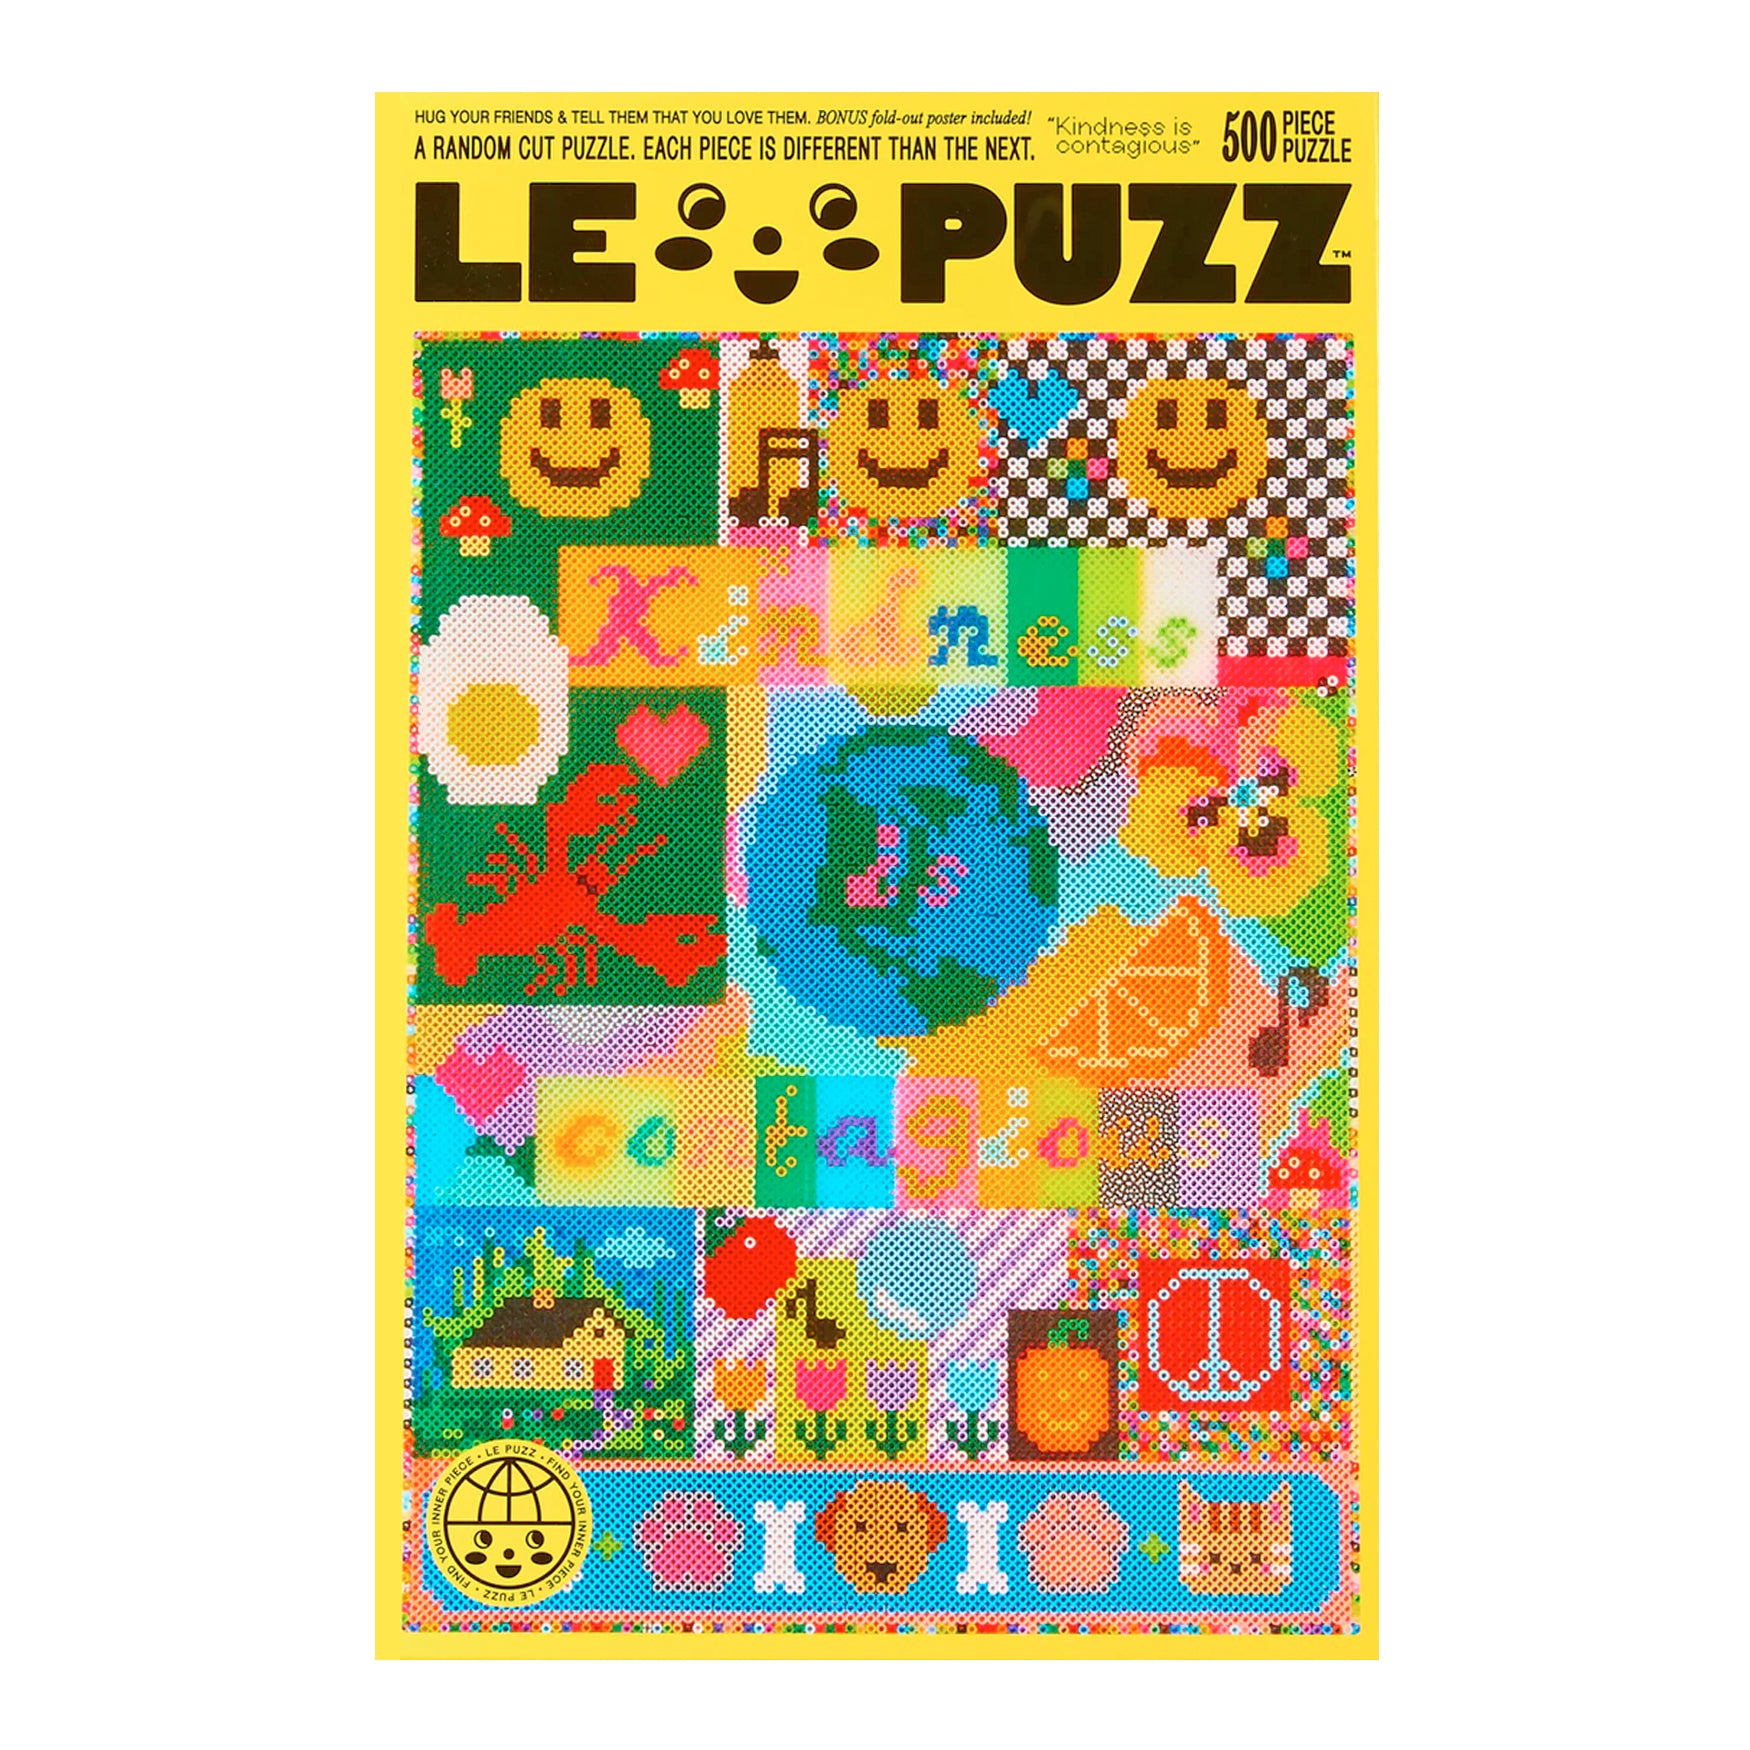 Puzzle Kindness Is Contagious - Le Puzz